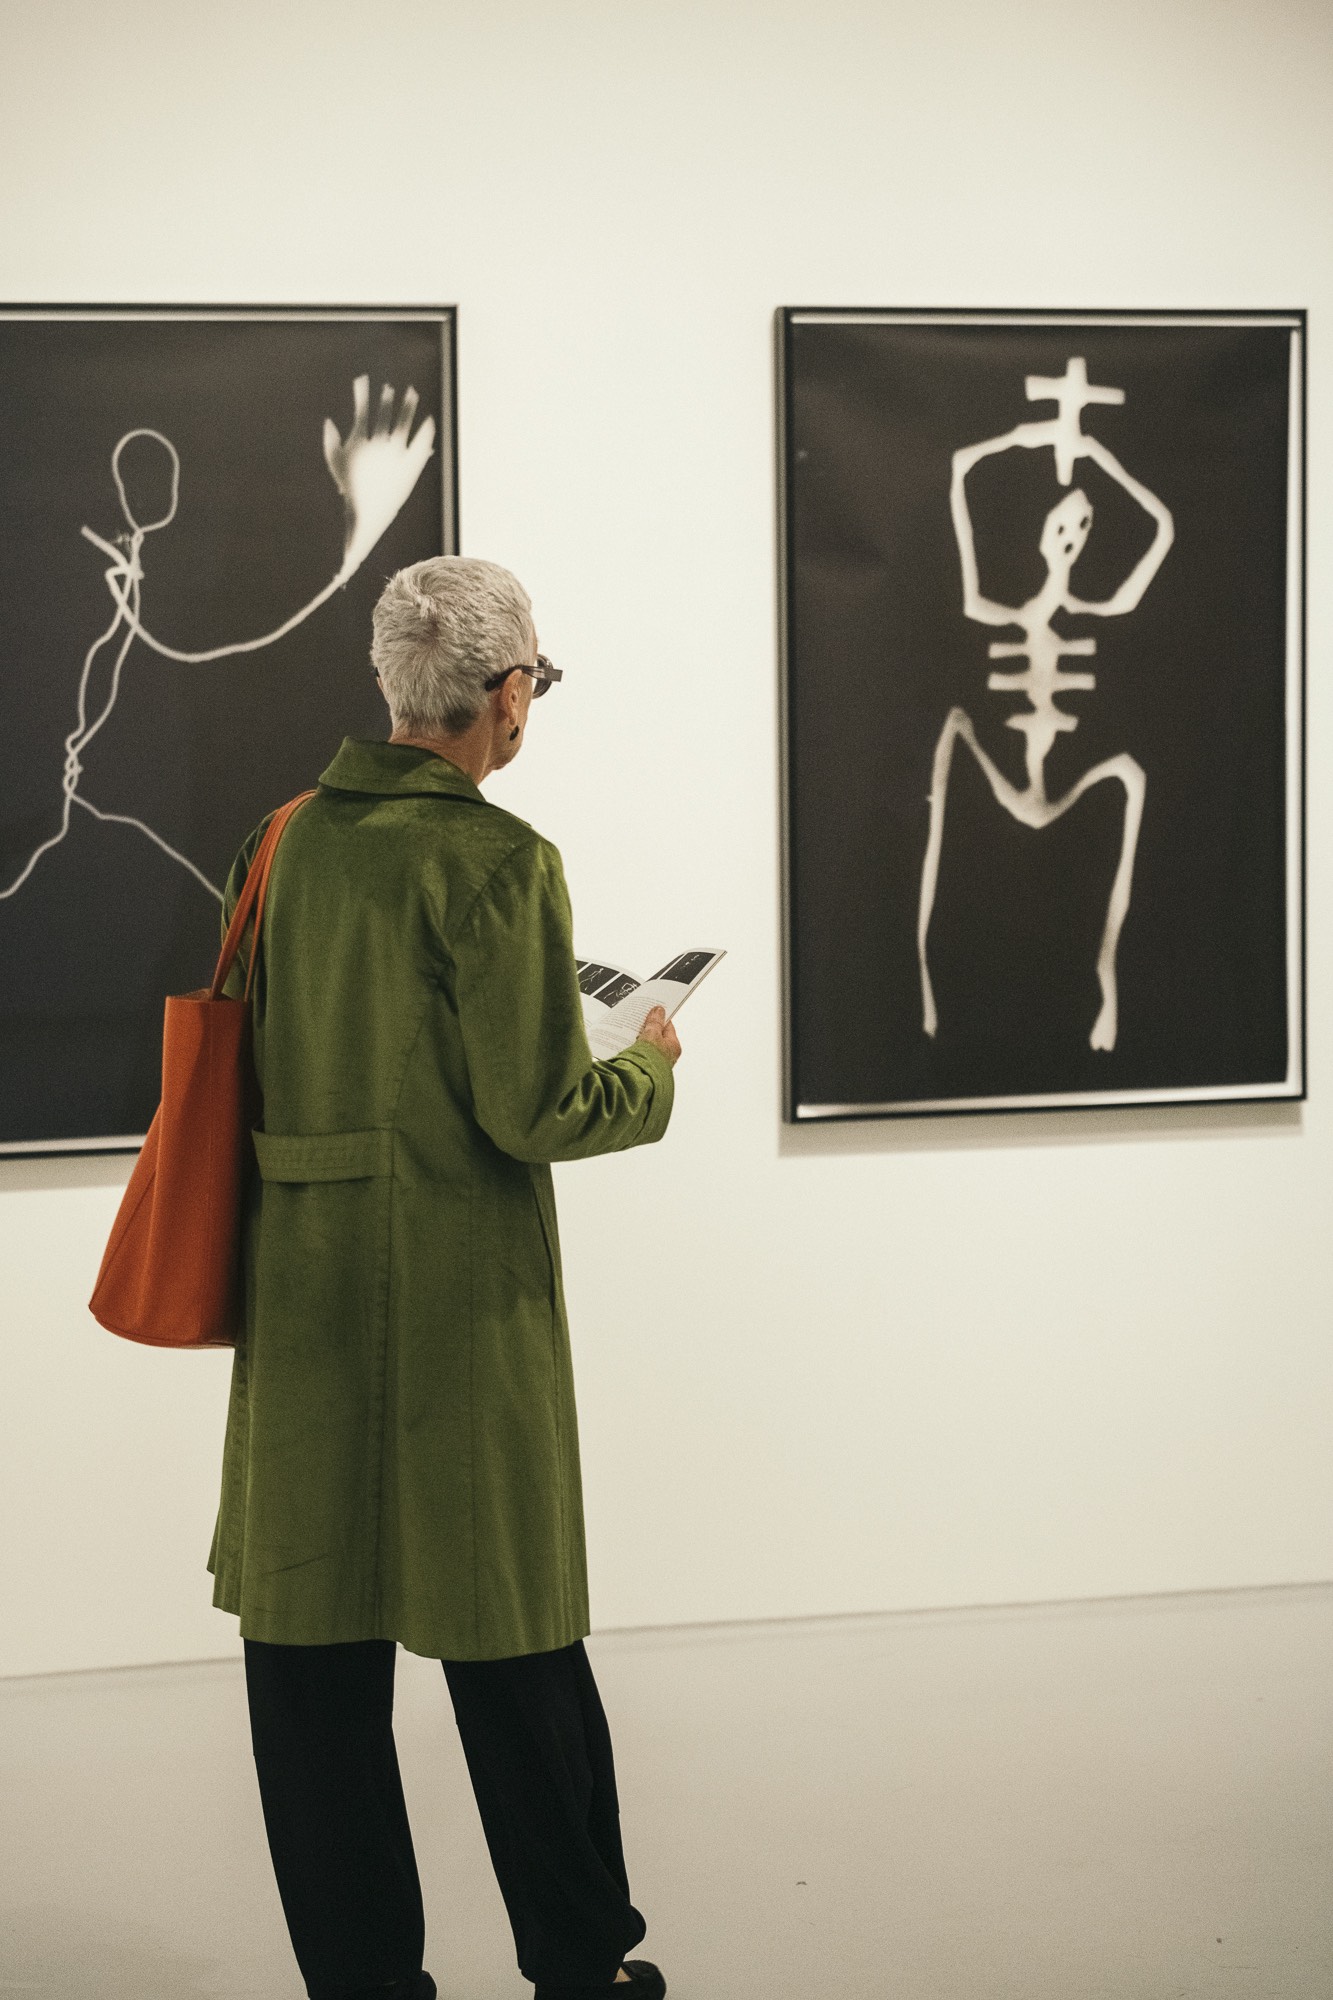 Ausstellung »Passagen« in der Kunststiftung DZ Bank, 2022. Foto: Silviu Guiman.